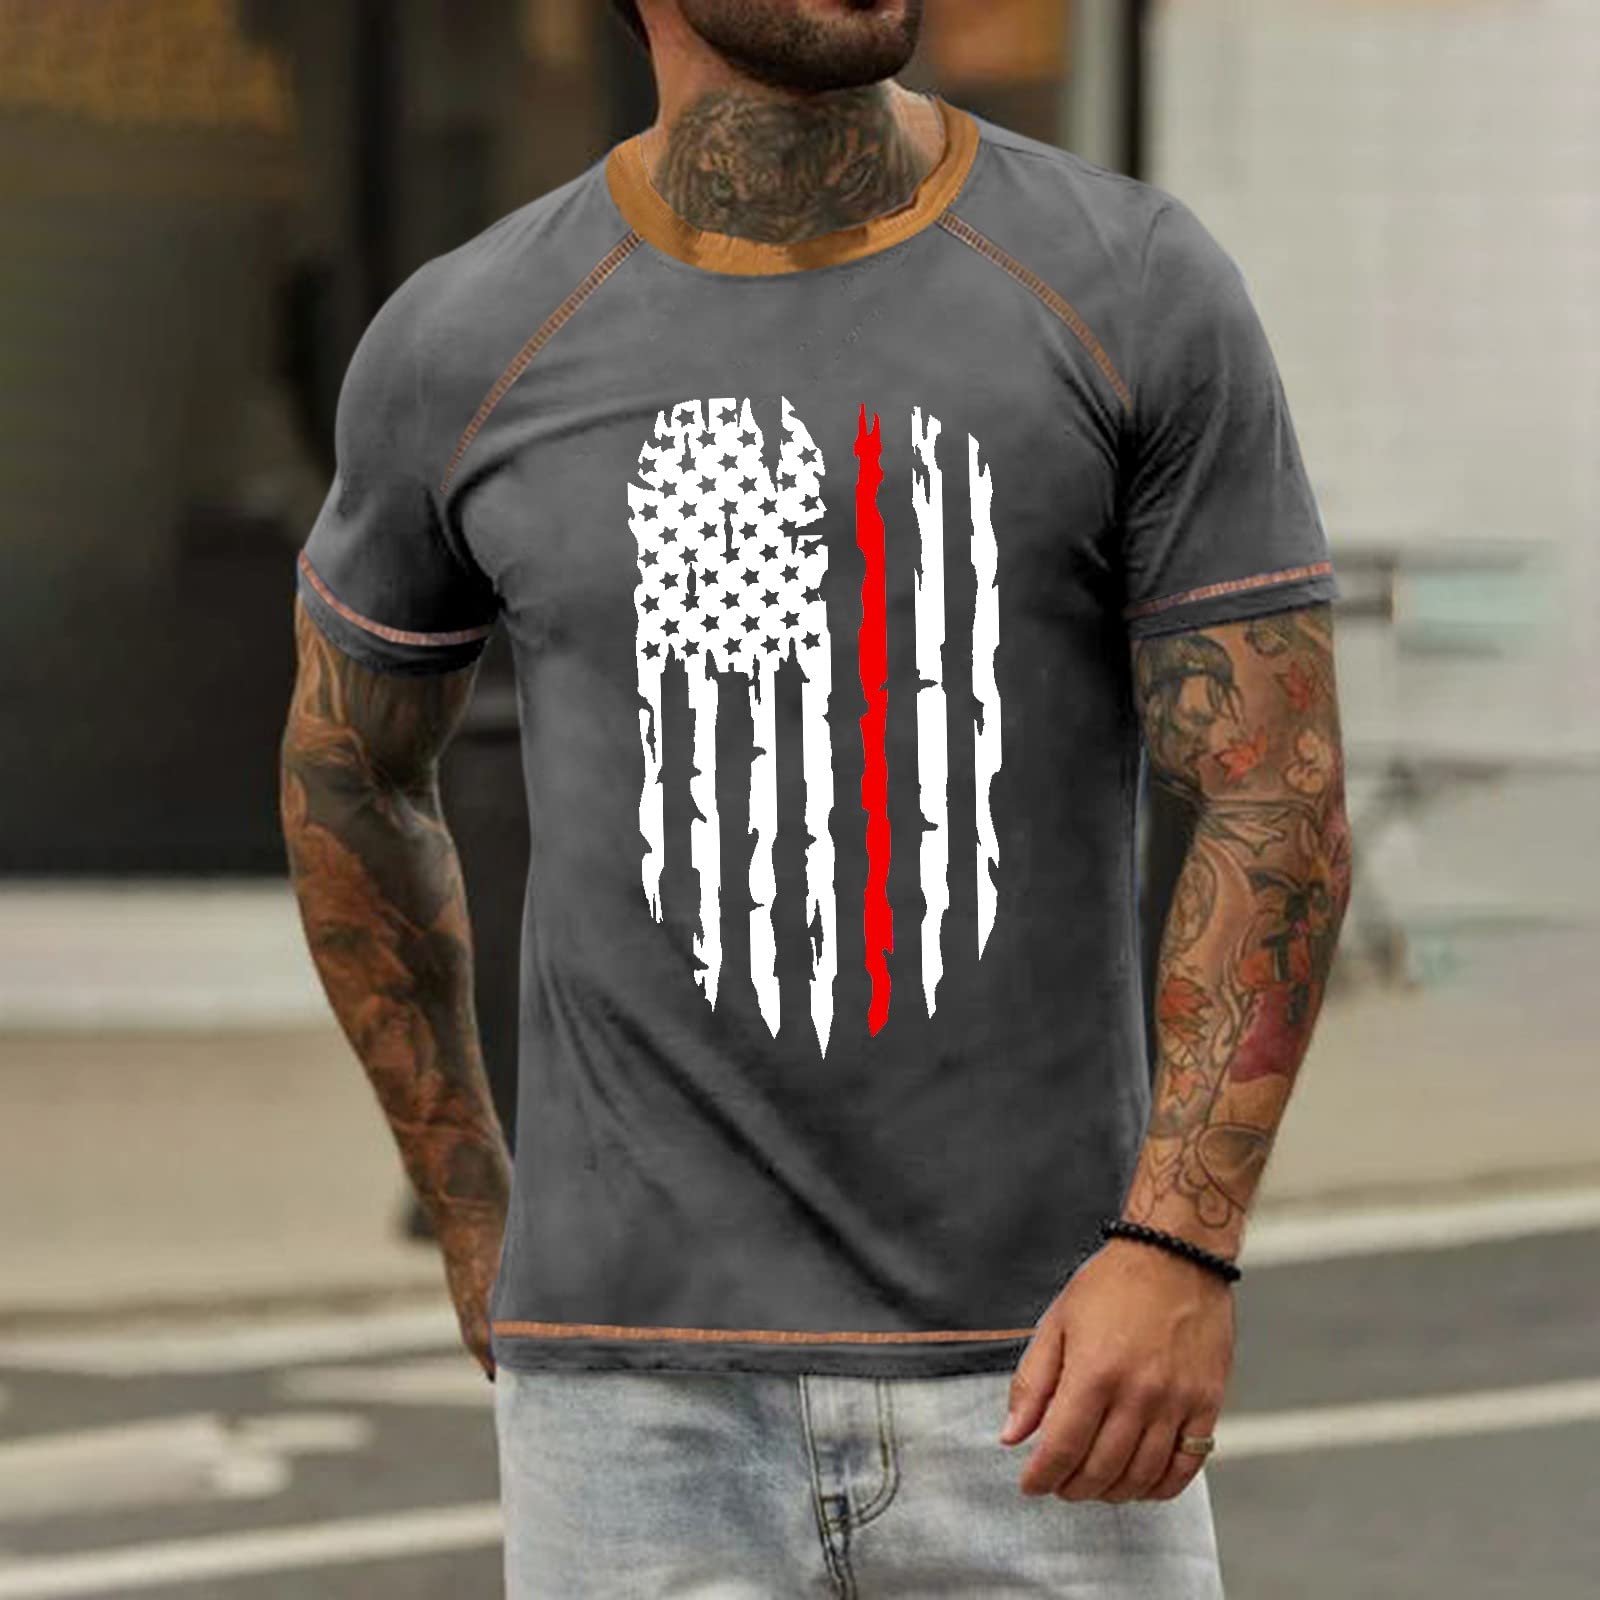 XIAXOGOOL T Shirt Men Independence Day Shirts Graphic Tee Big and Tall Distressed American Flag Print Shirt Vintage T Shirts